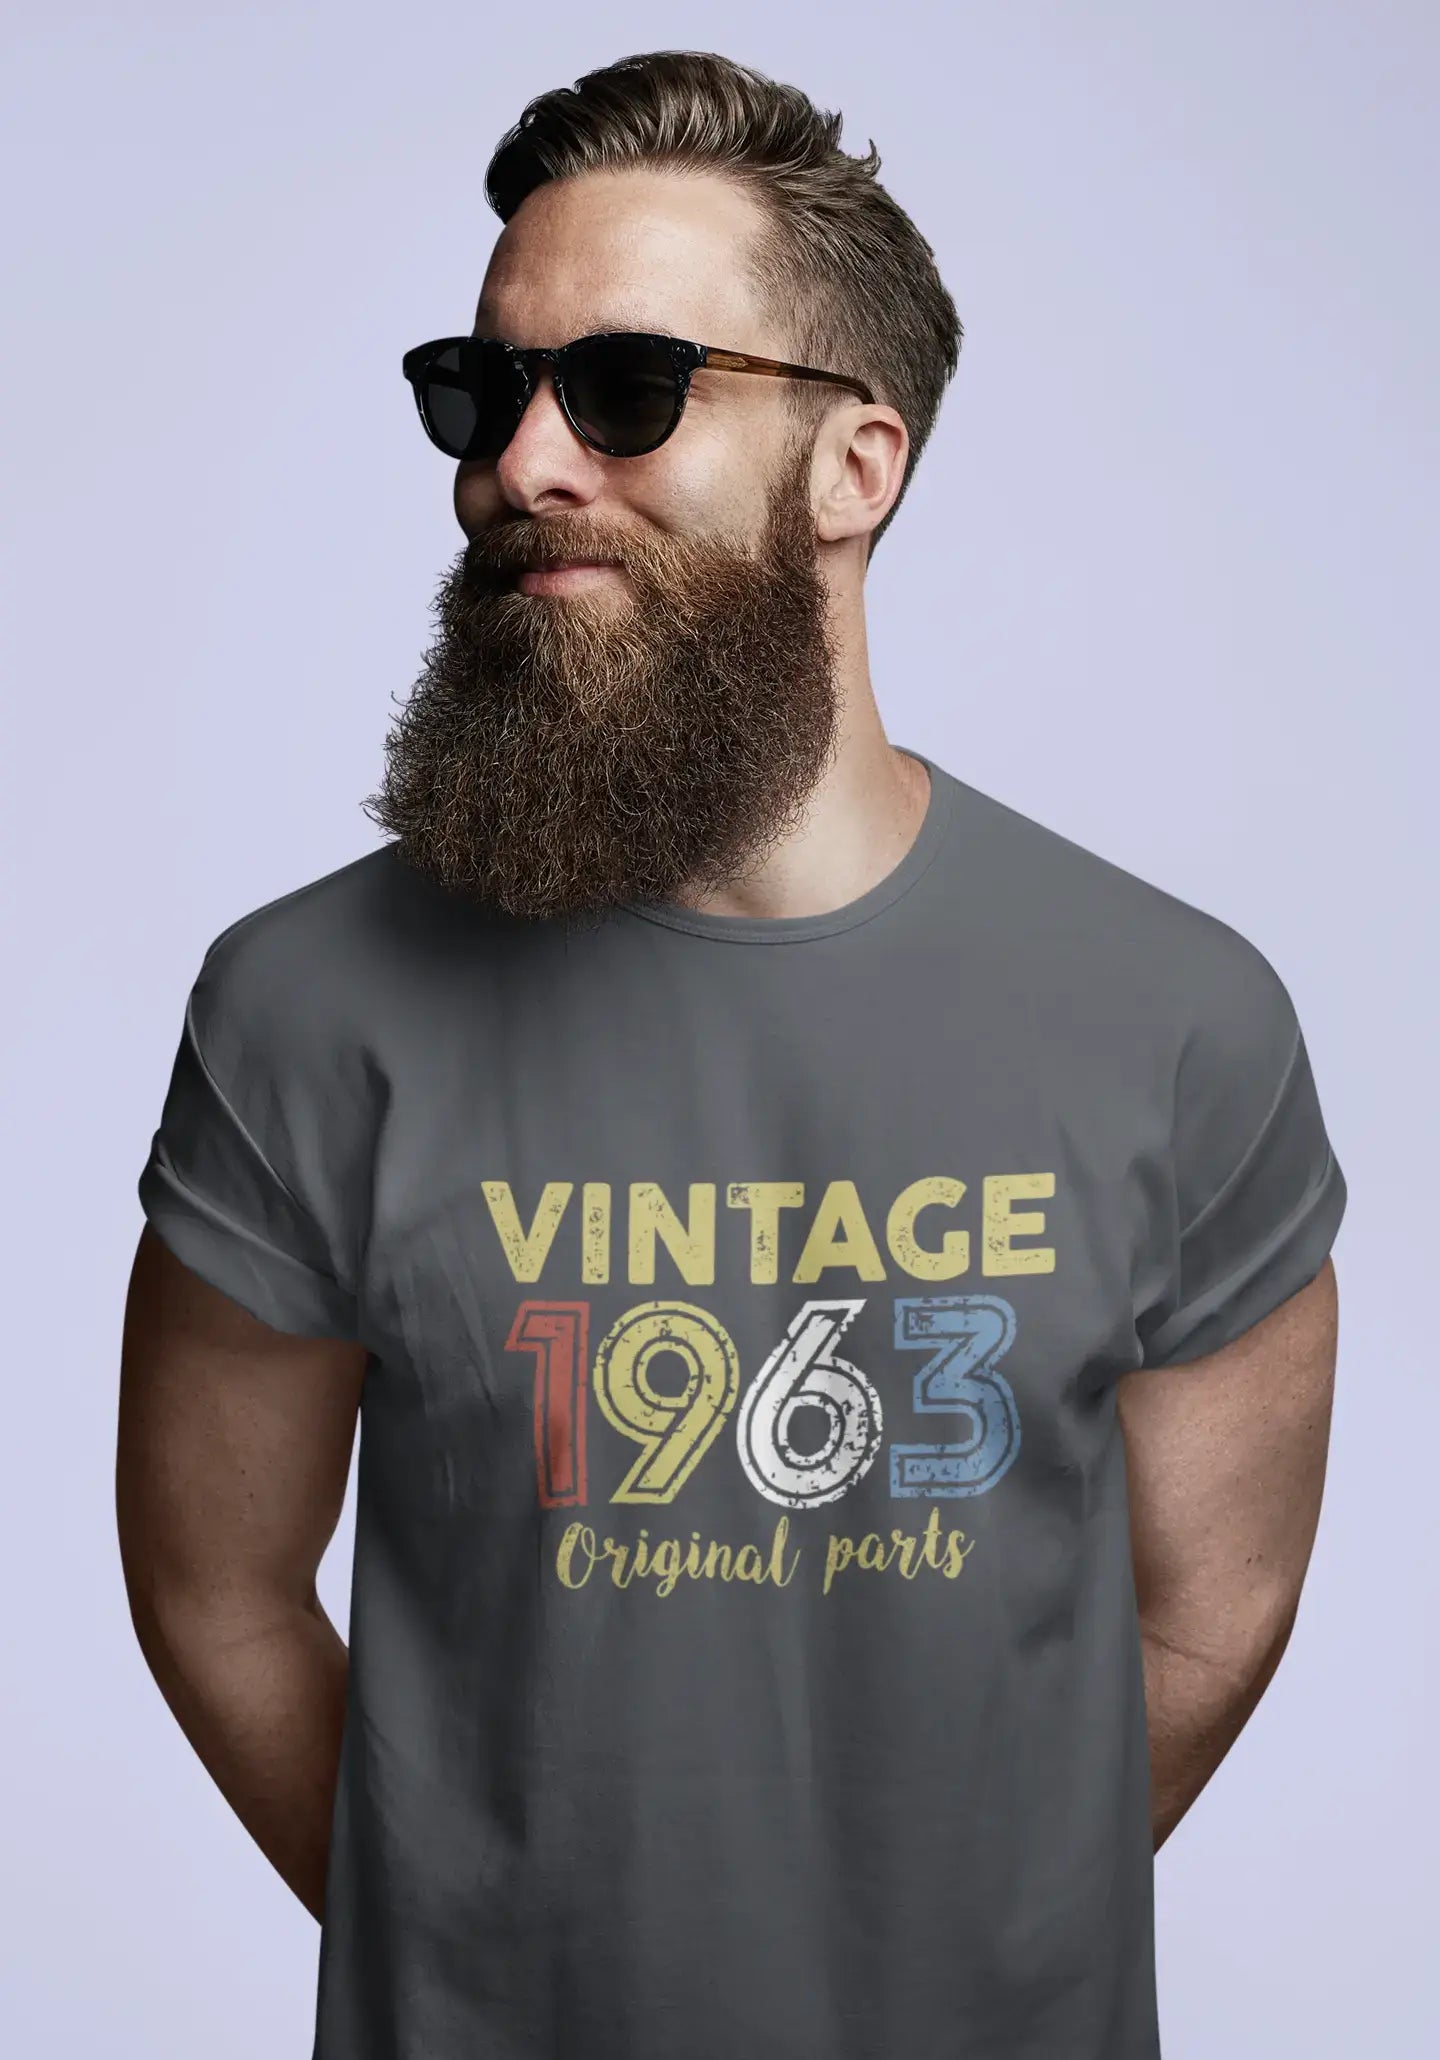 ULTRABASIC - Graphic Printed Men's Vintage 1963 T-Shirt Denim